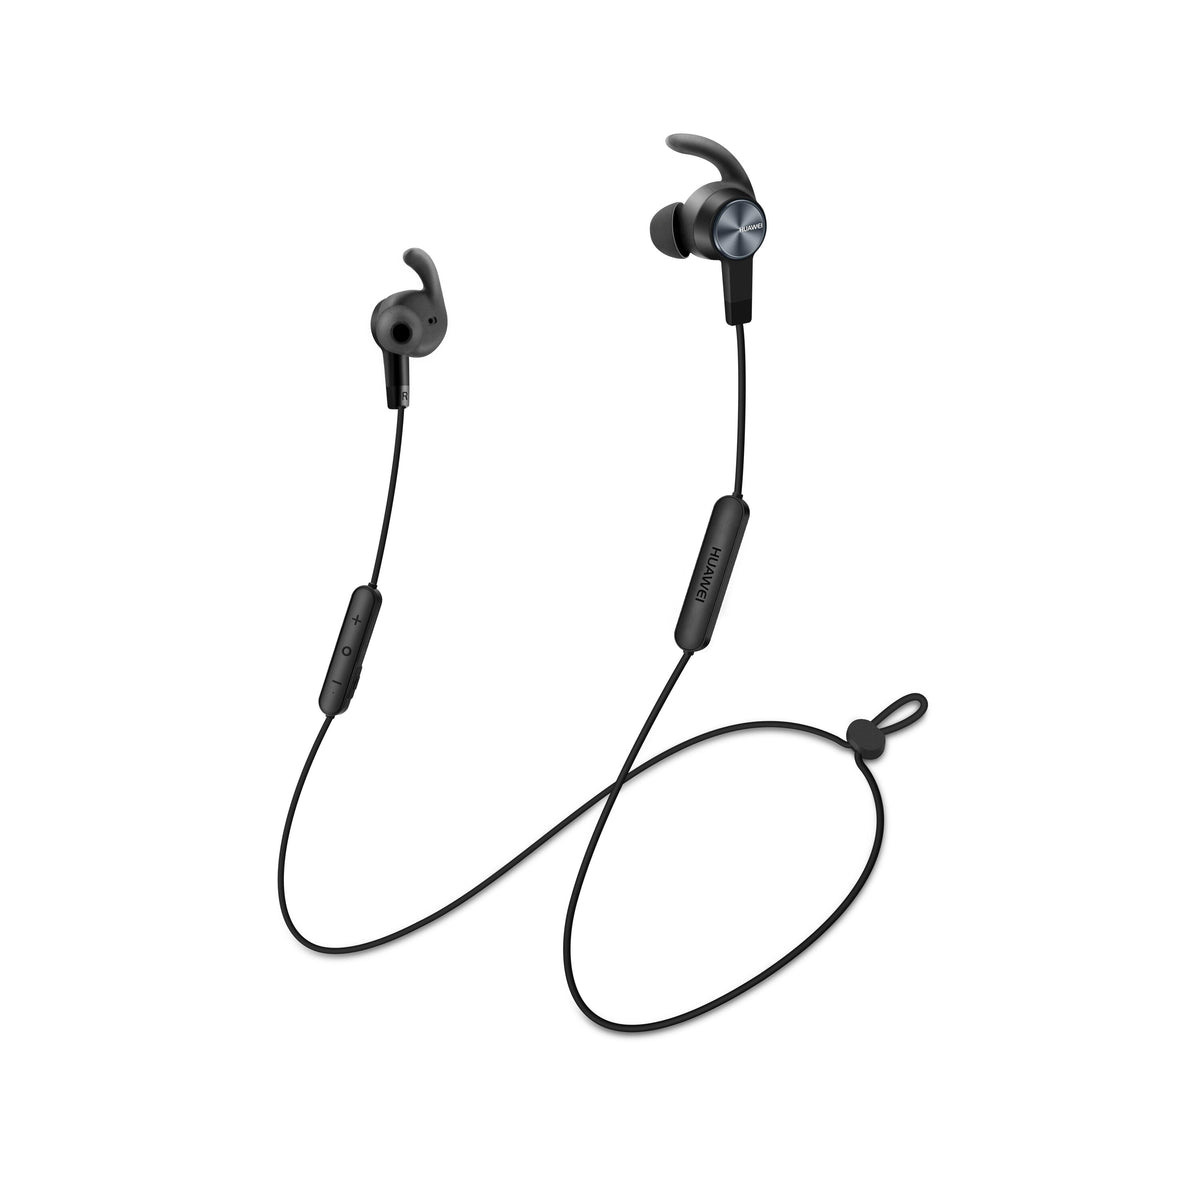 Bezdrátová sluchátka Huawei AM61